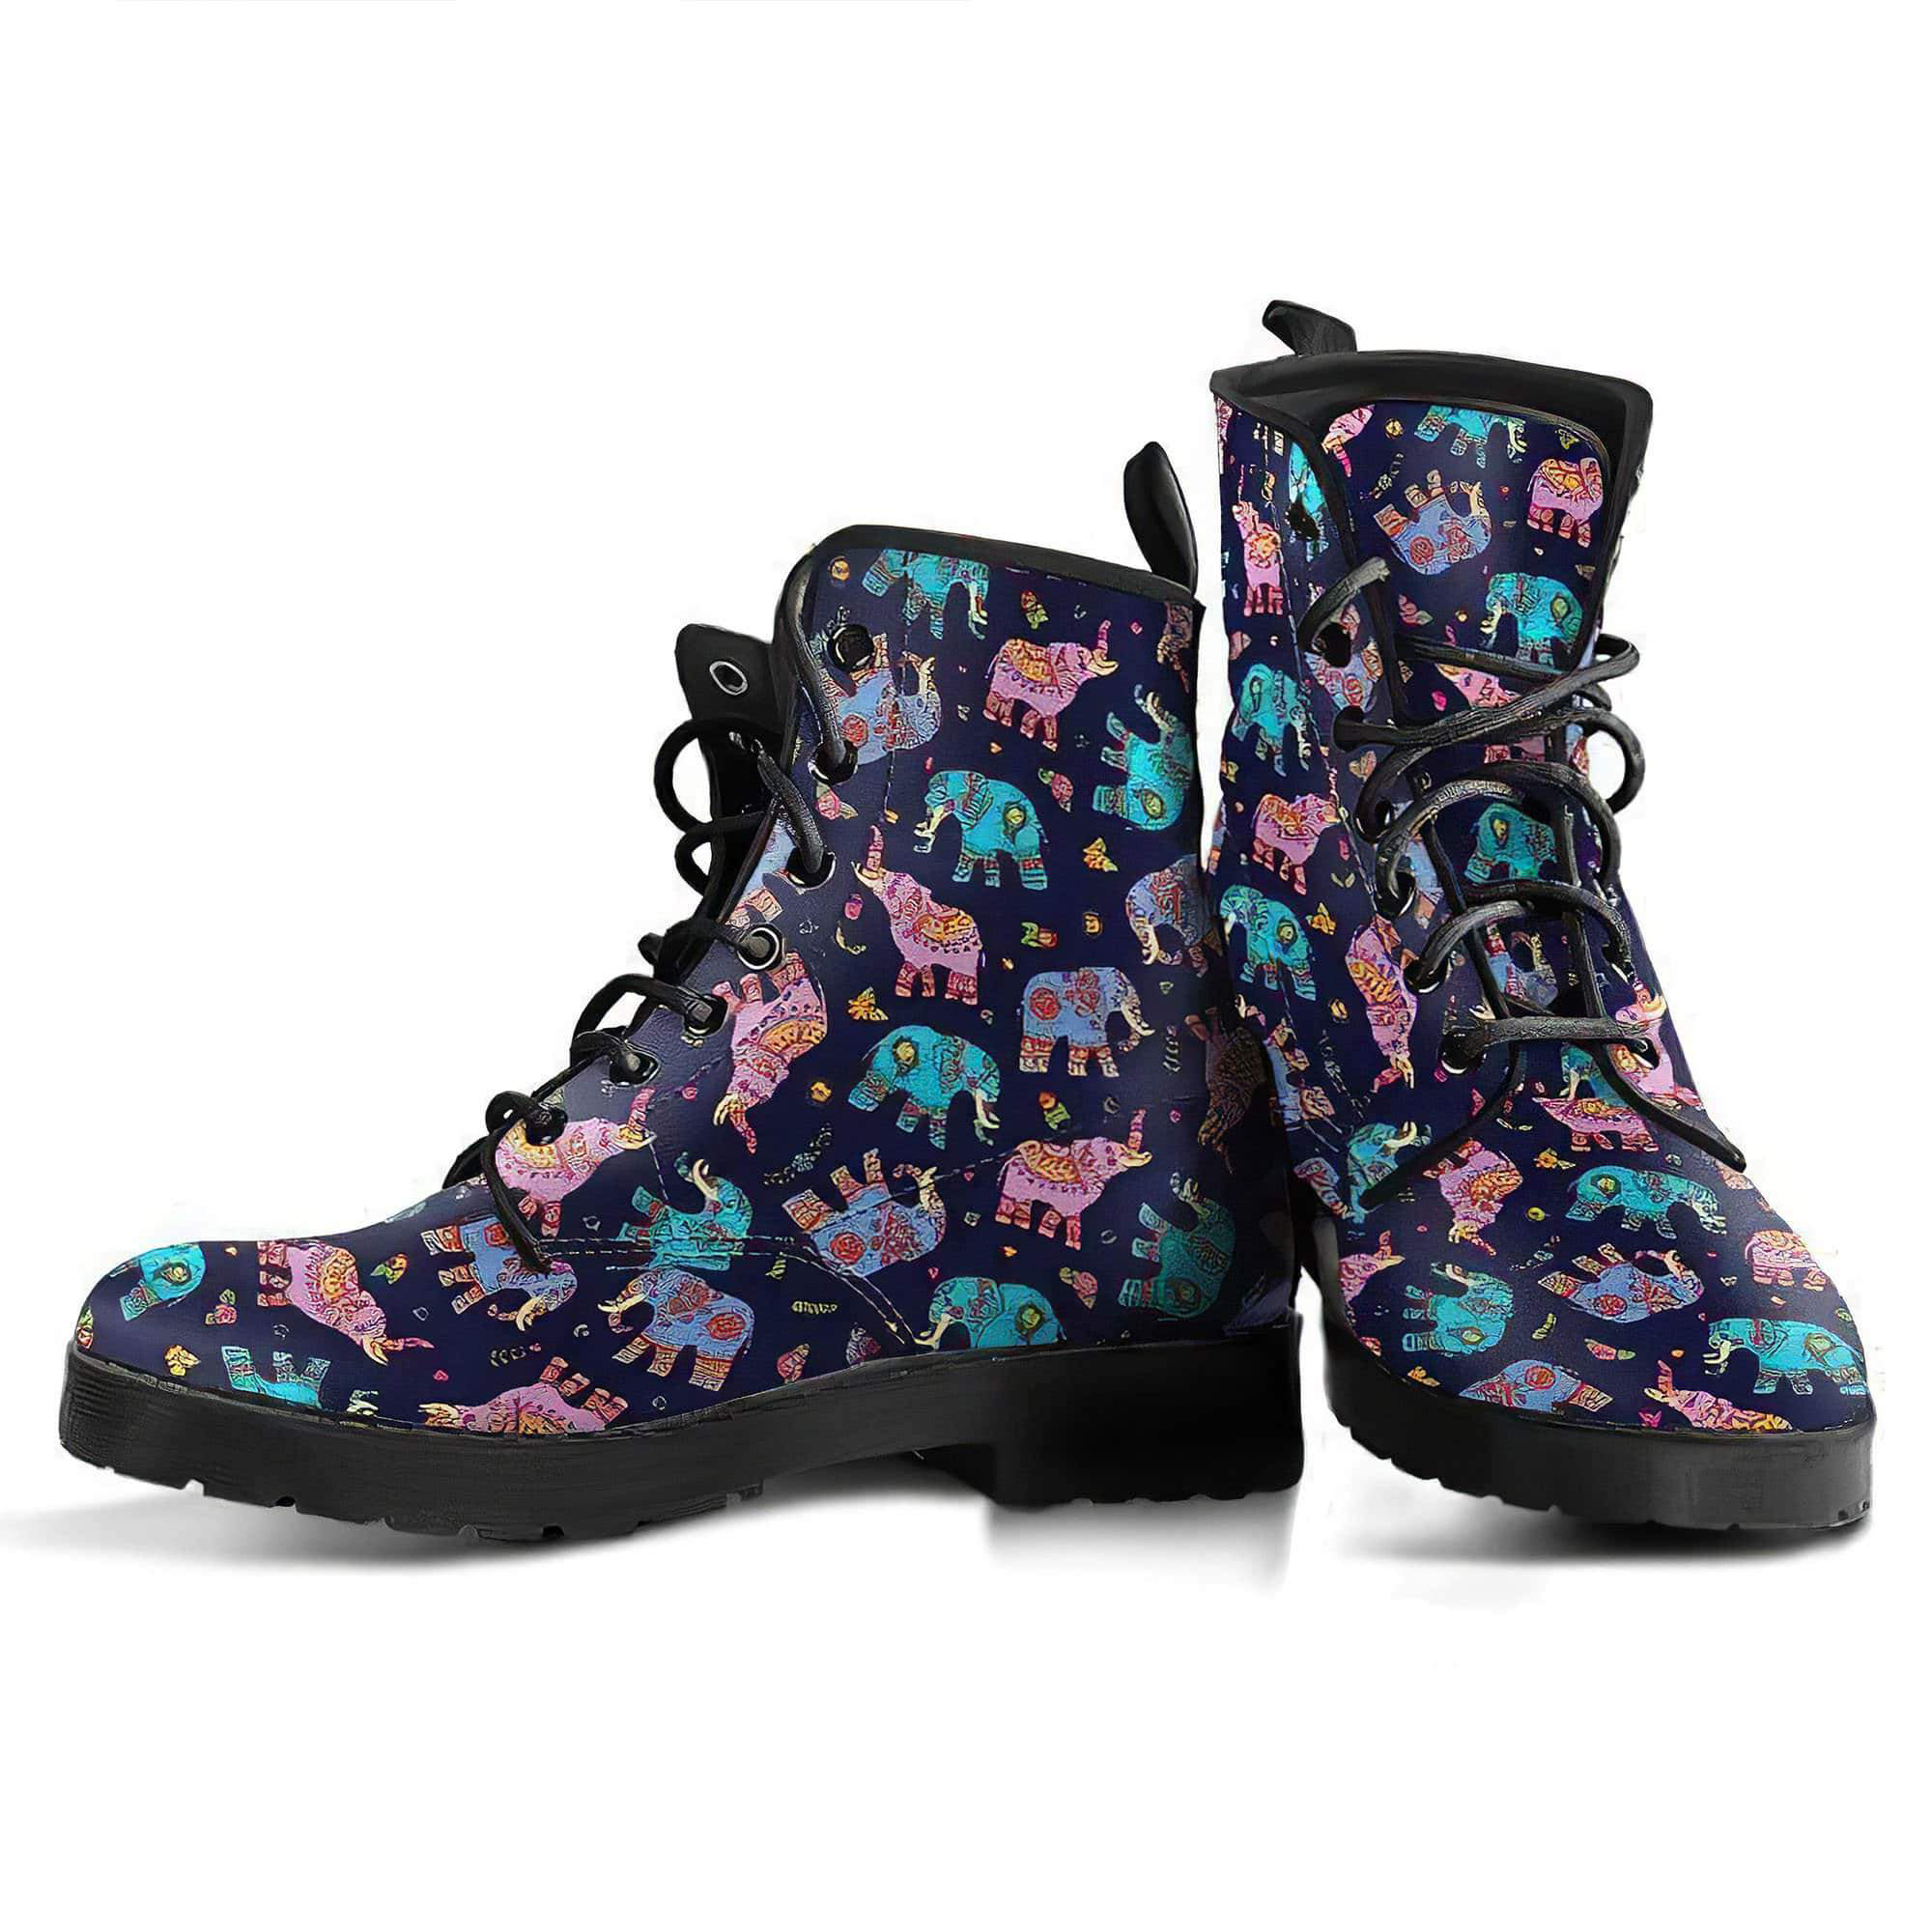 elephant-pattern-women-s-boots-vegan-friendly-leather-women-s-leather-boots-12051848691773.jpg